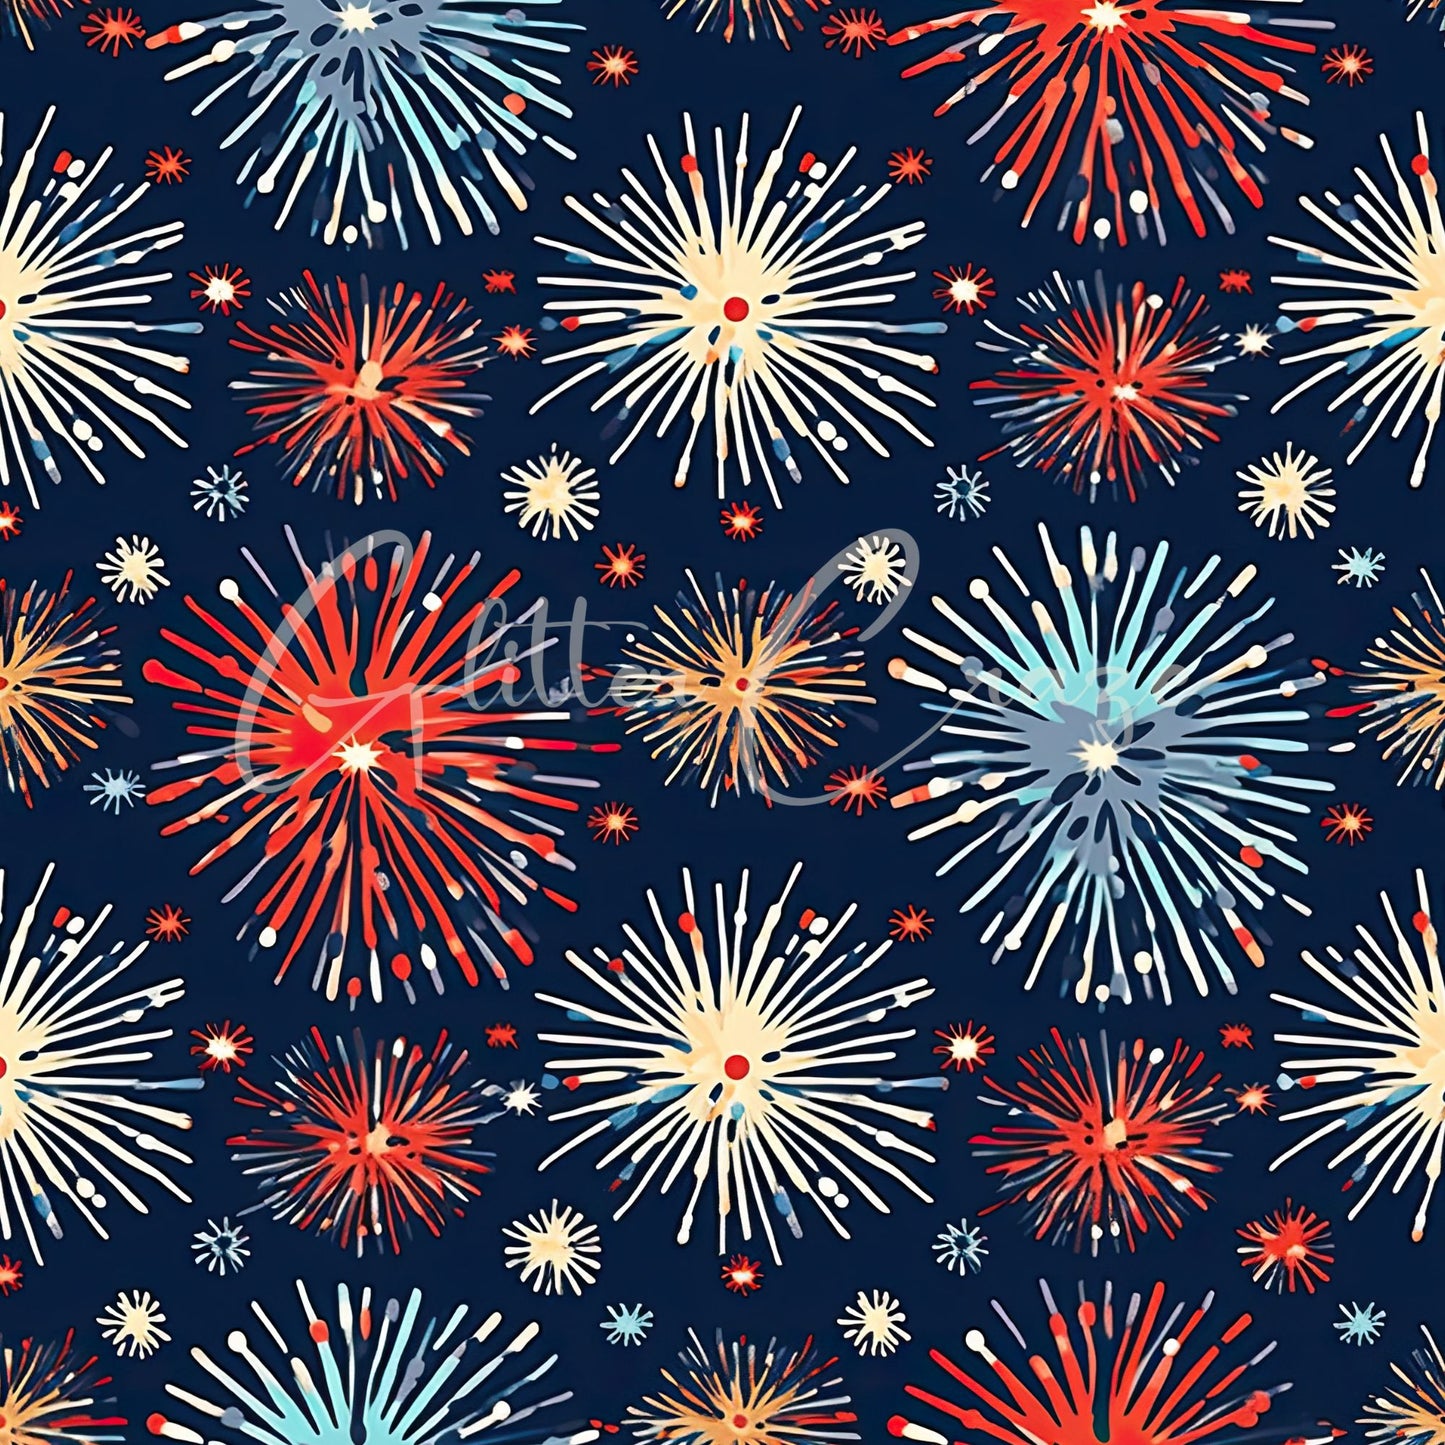 Fireworks 12x12 sheets - 10 Design Options